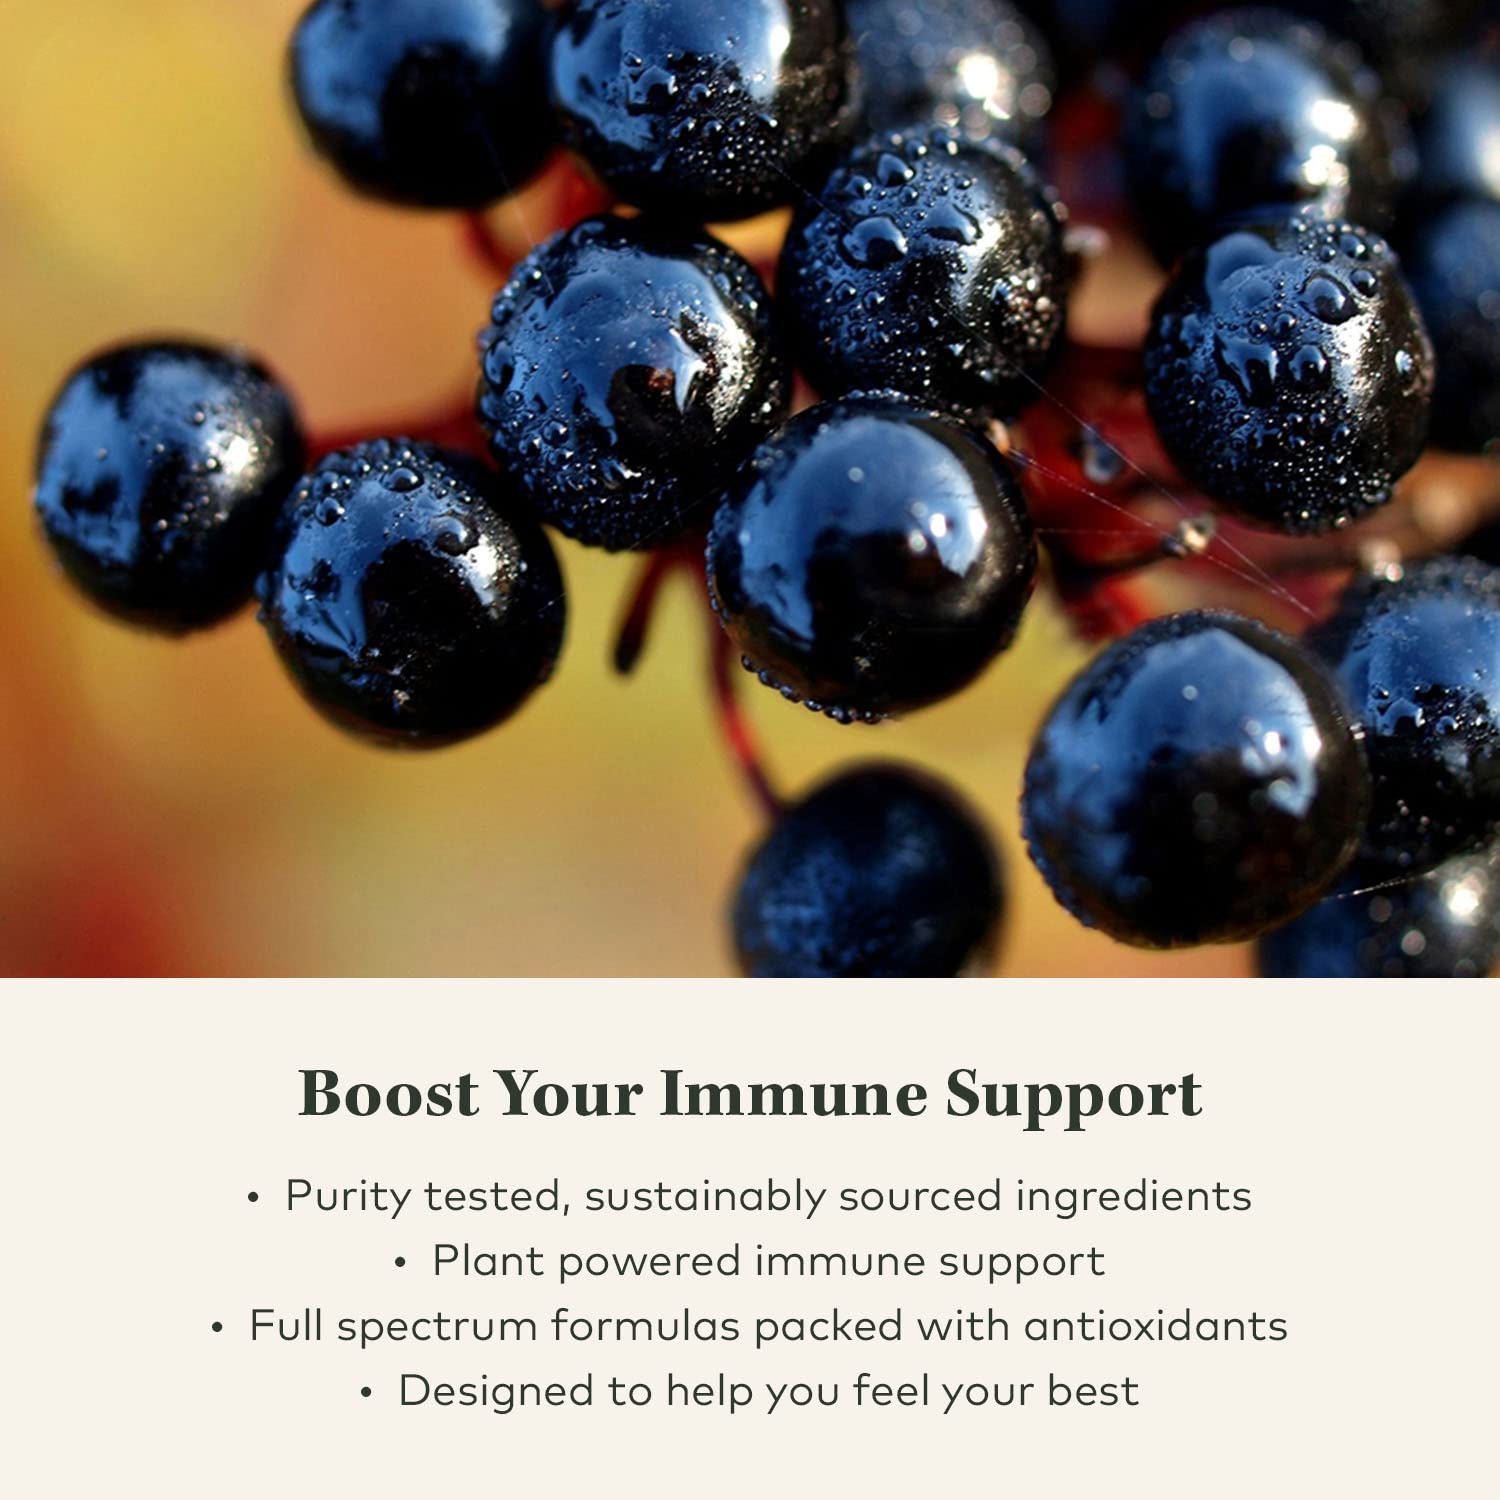 Gaia Herbs Black Elderberry Syrup - Daily Immune Support with Antioxidants, Organic Sambucus Elderberry Supplement, 5.4 Fl Oz